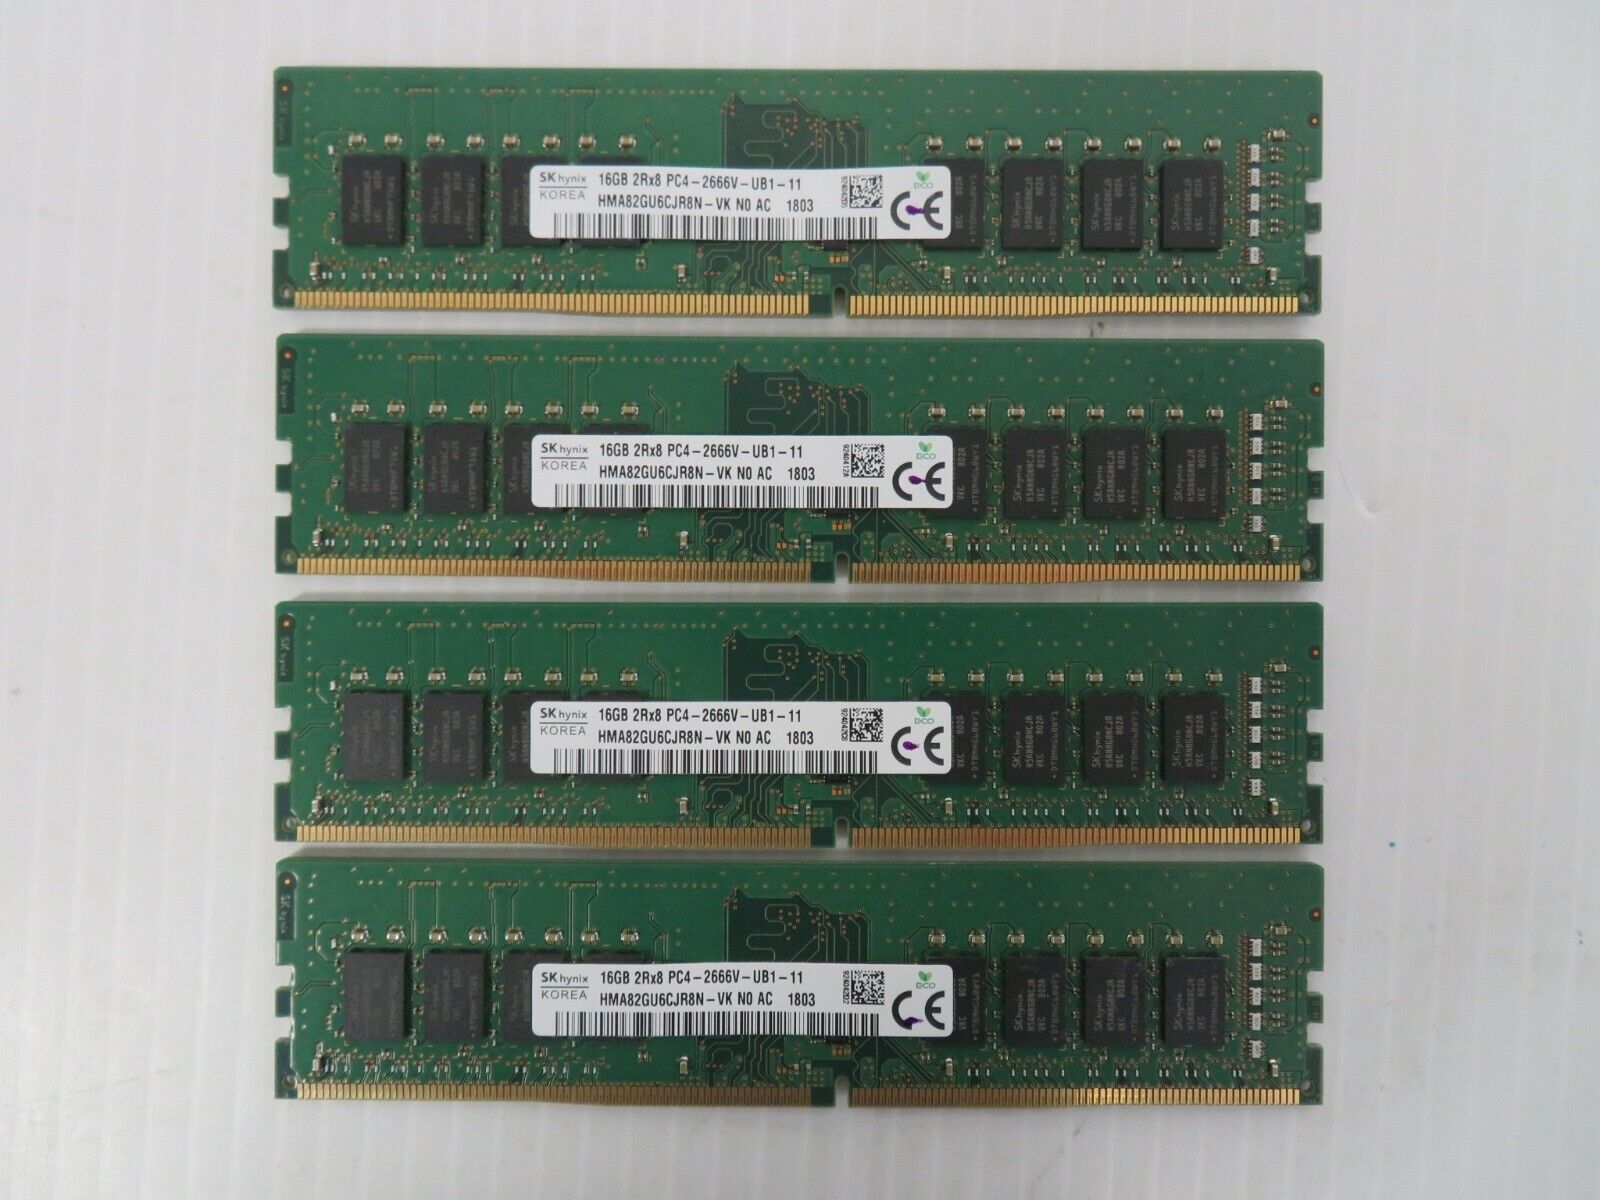 Dell XPS 8930 64GB (4x16GB) PC4-2666V DDR4 RAM Memory Kit Hynix HMA82GU6CJR8N-VK